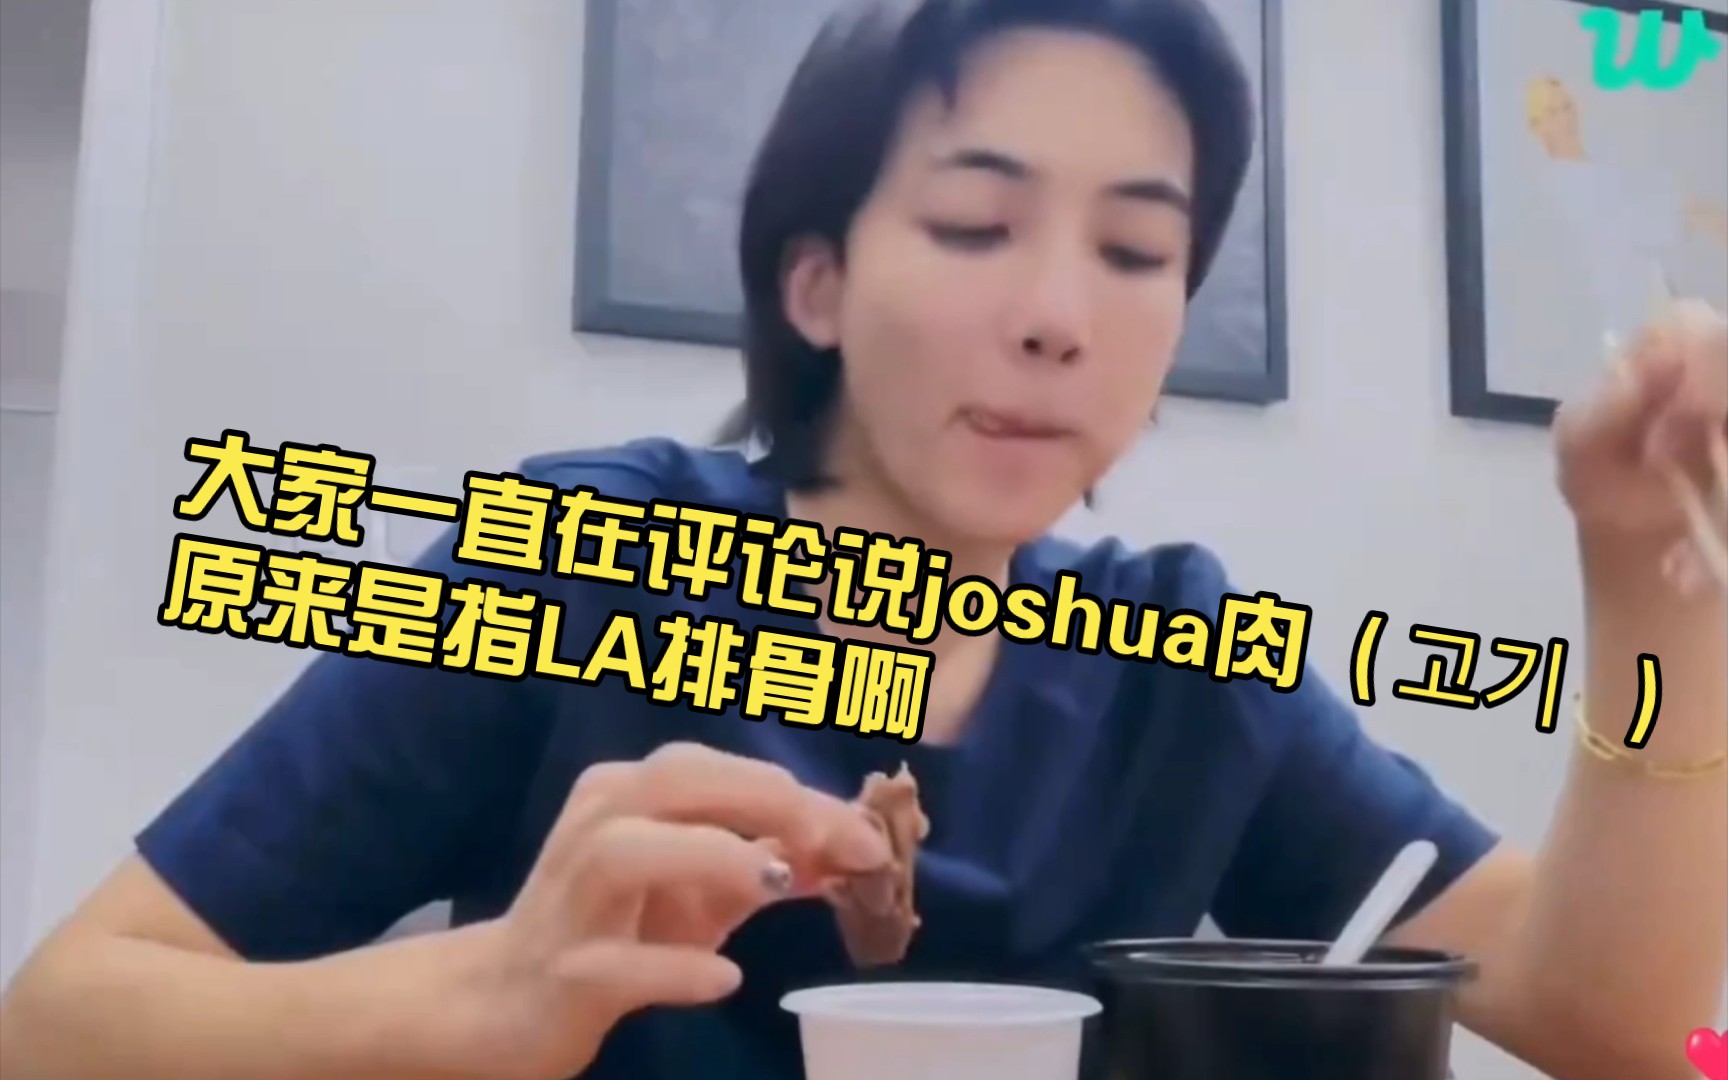 【wvs直播】净汉:今天吃的是嫩豆腐汤和LA排骨~